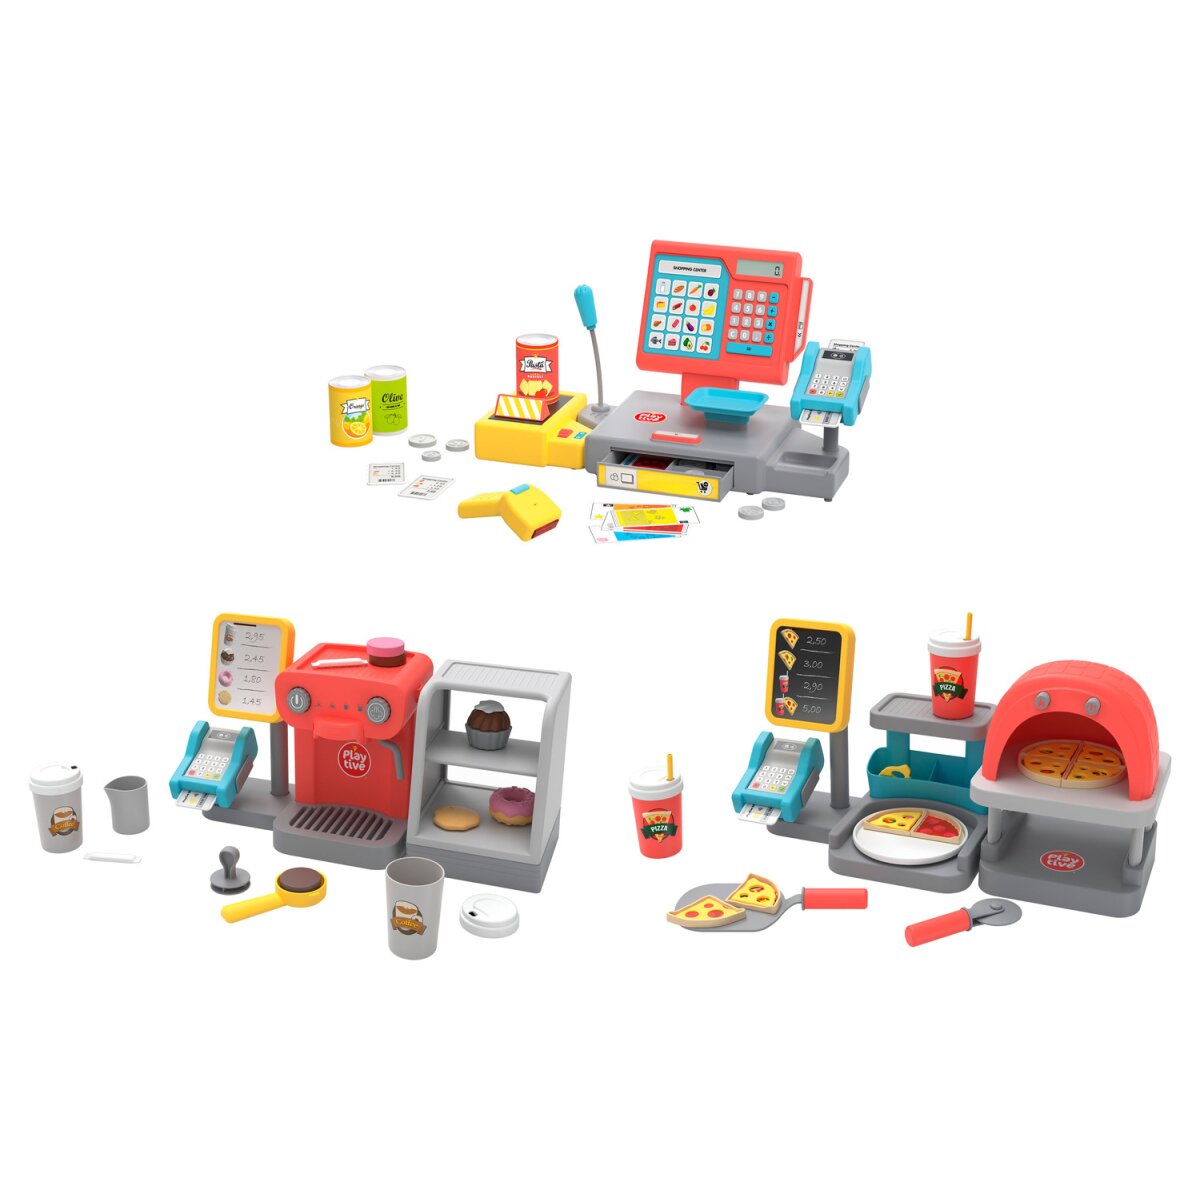 Playtive Spielzeugkasse / - Cafe-Shop 12,99 € Pizza-Shop B-Ware, 